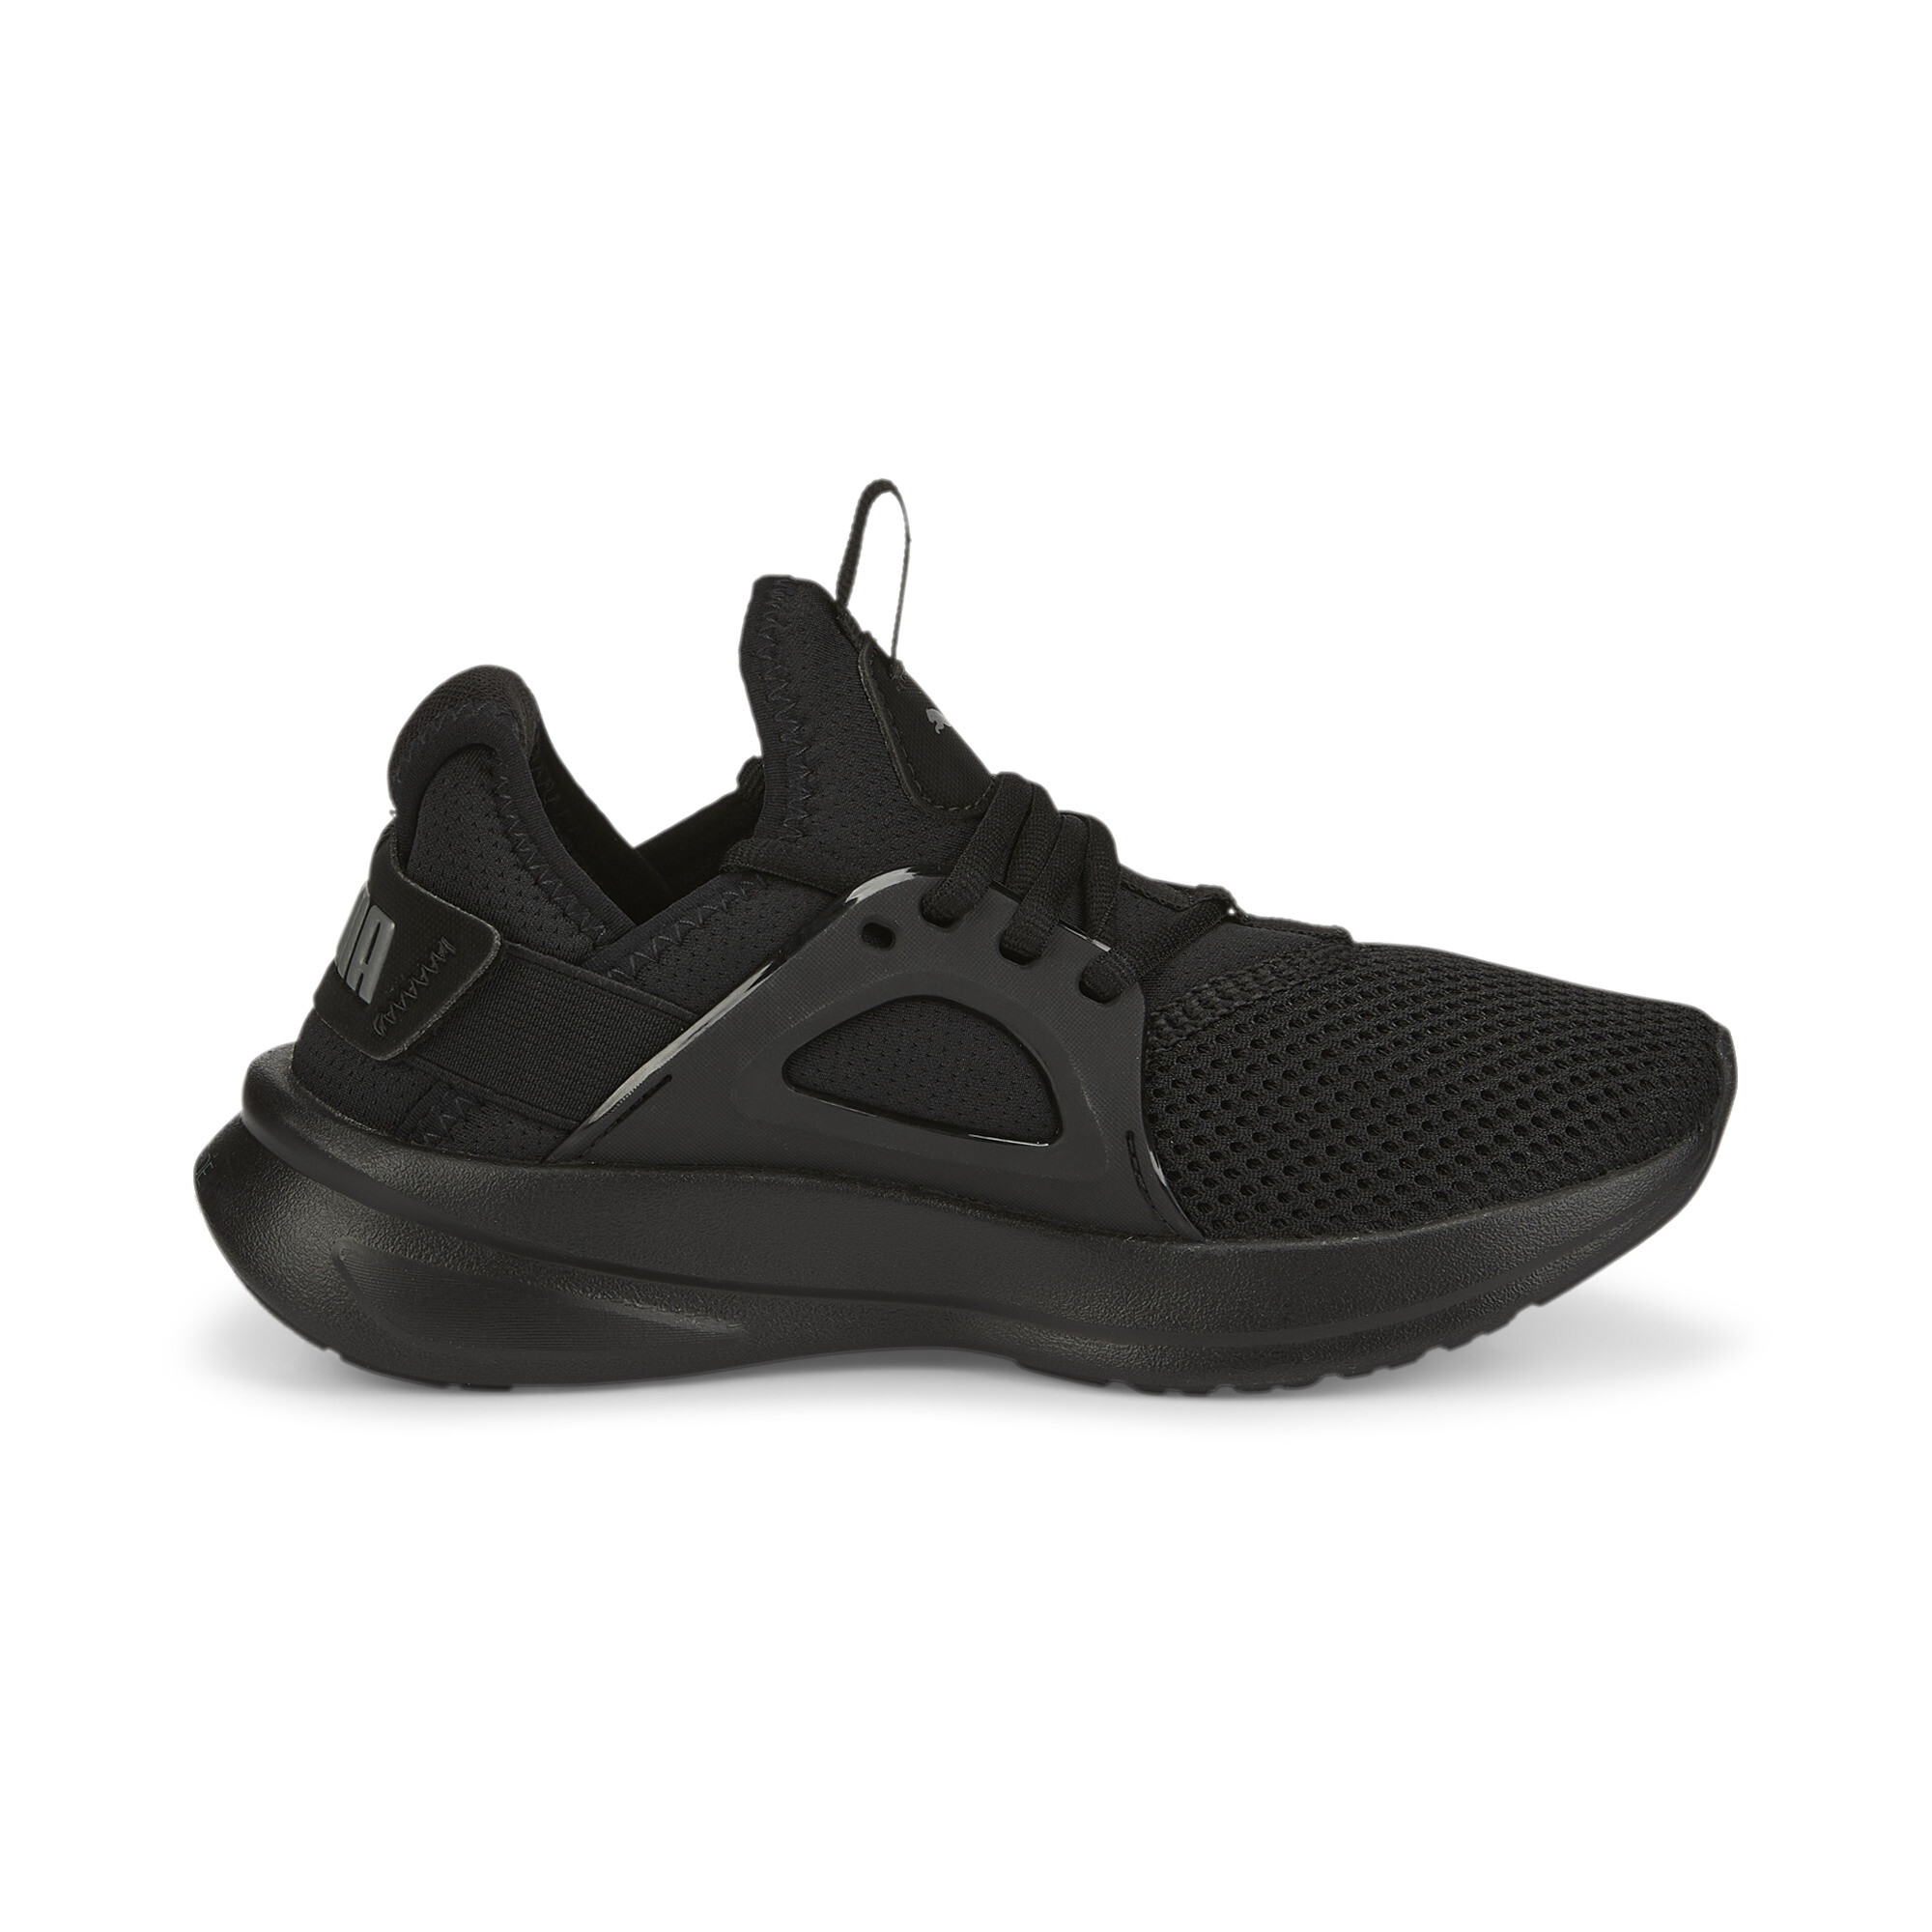 PUMA Softride Enzo Evo Sneakers Youth In Black, Size EU 35.5